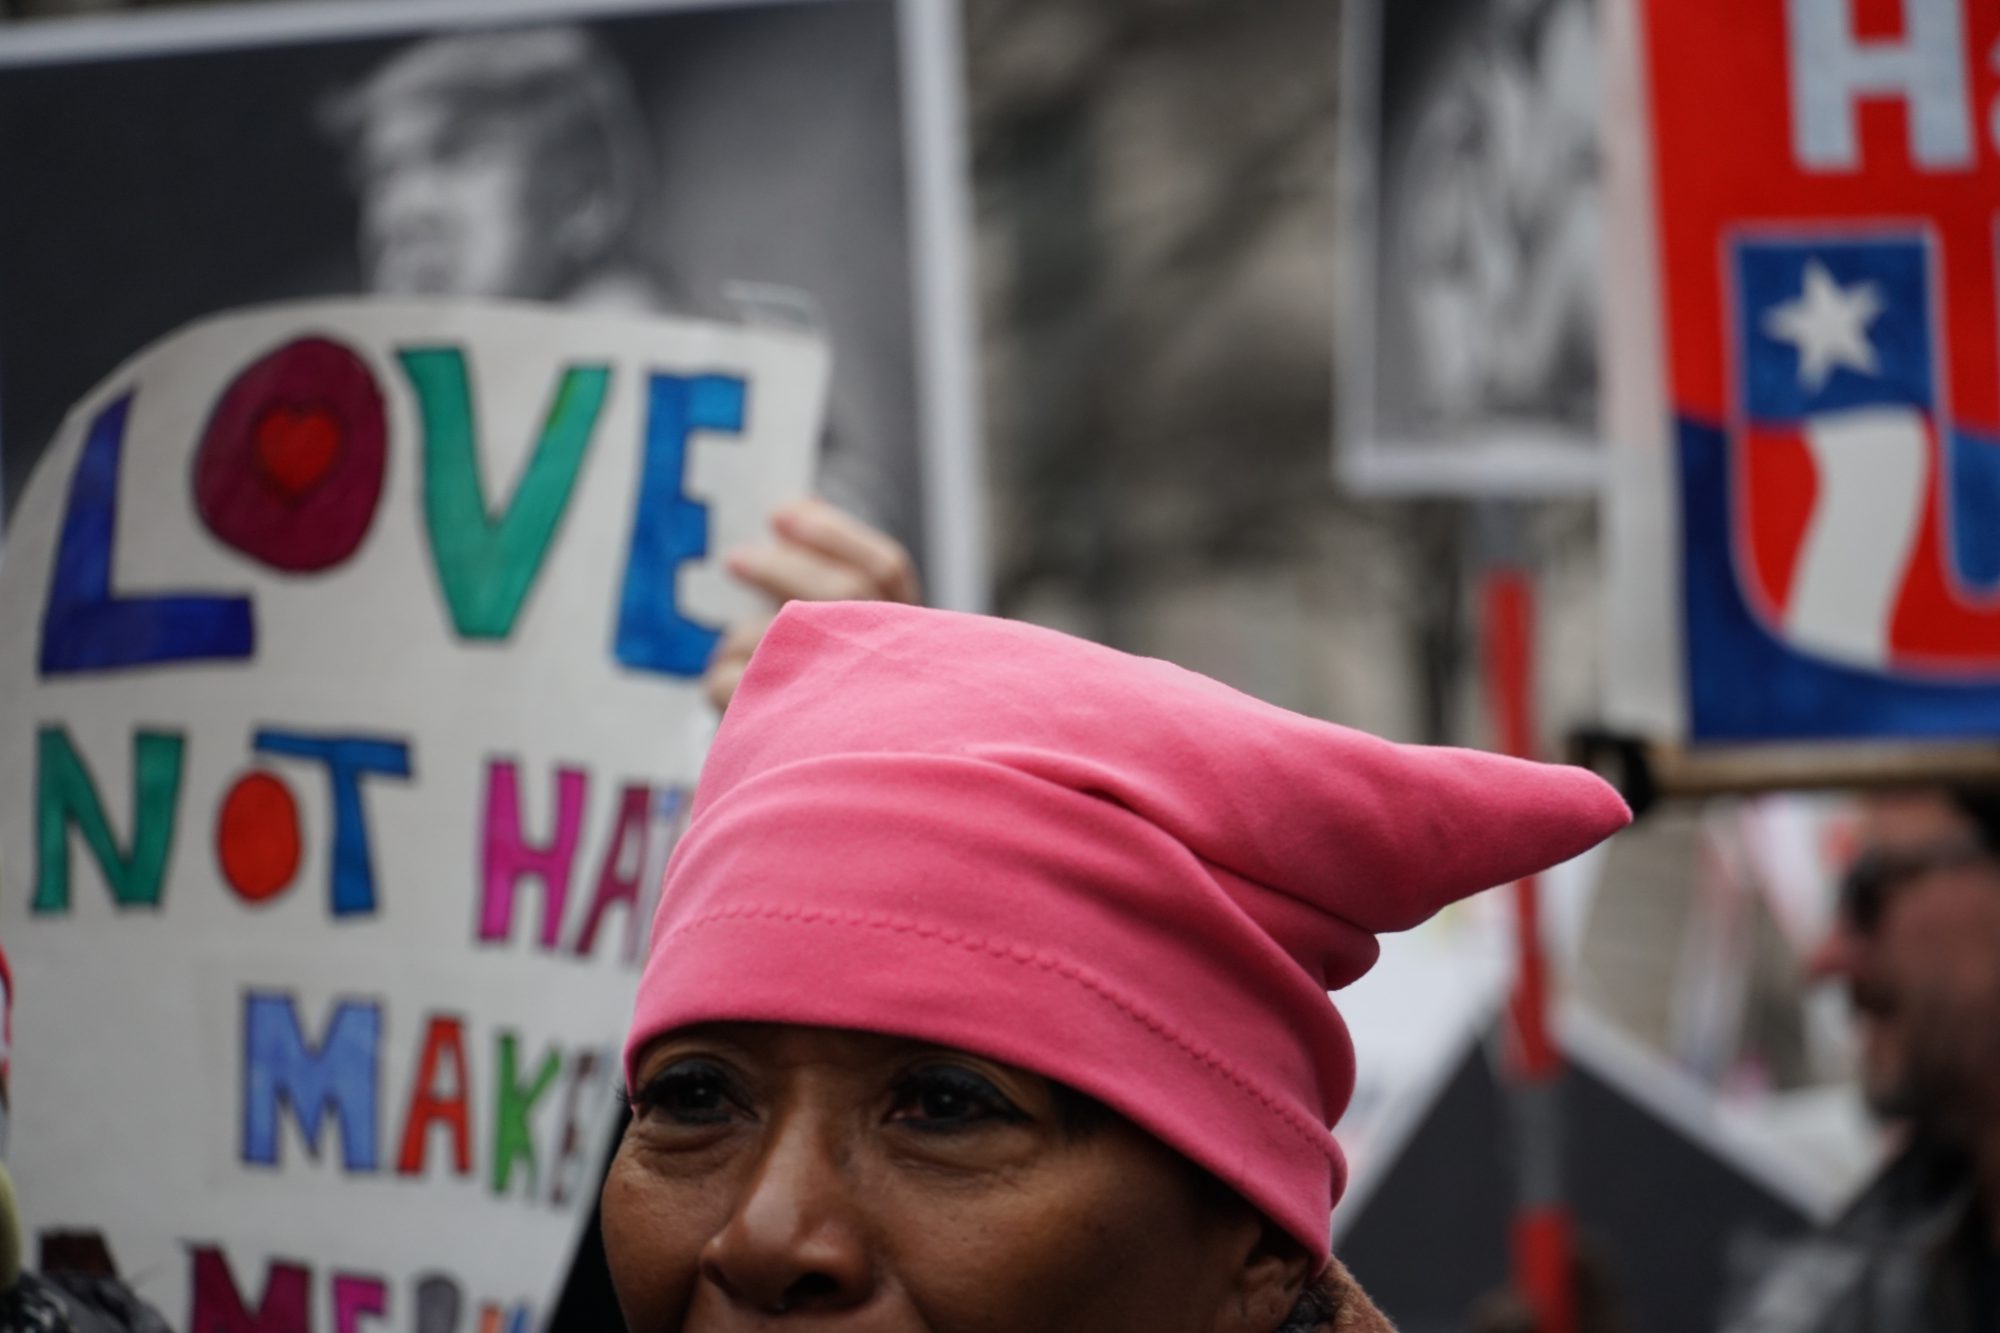 Many women wore pink hats to show solidarity in demanding women's rights. (Ester Wells/MNS)